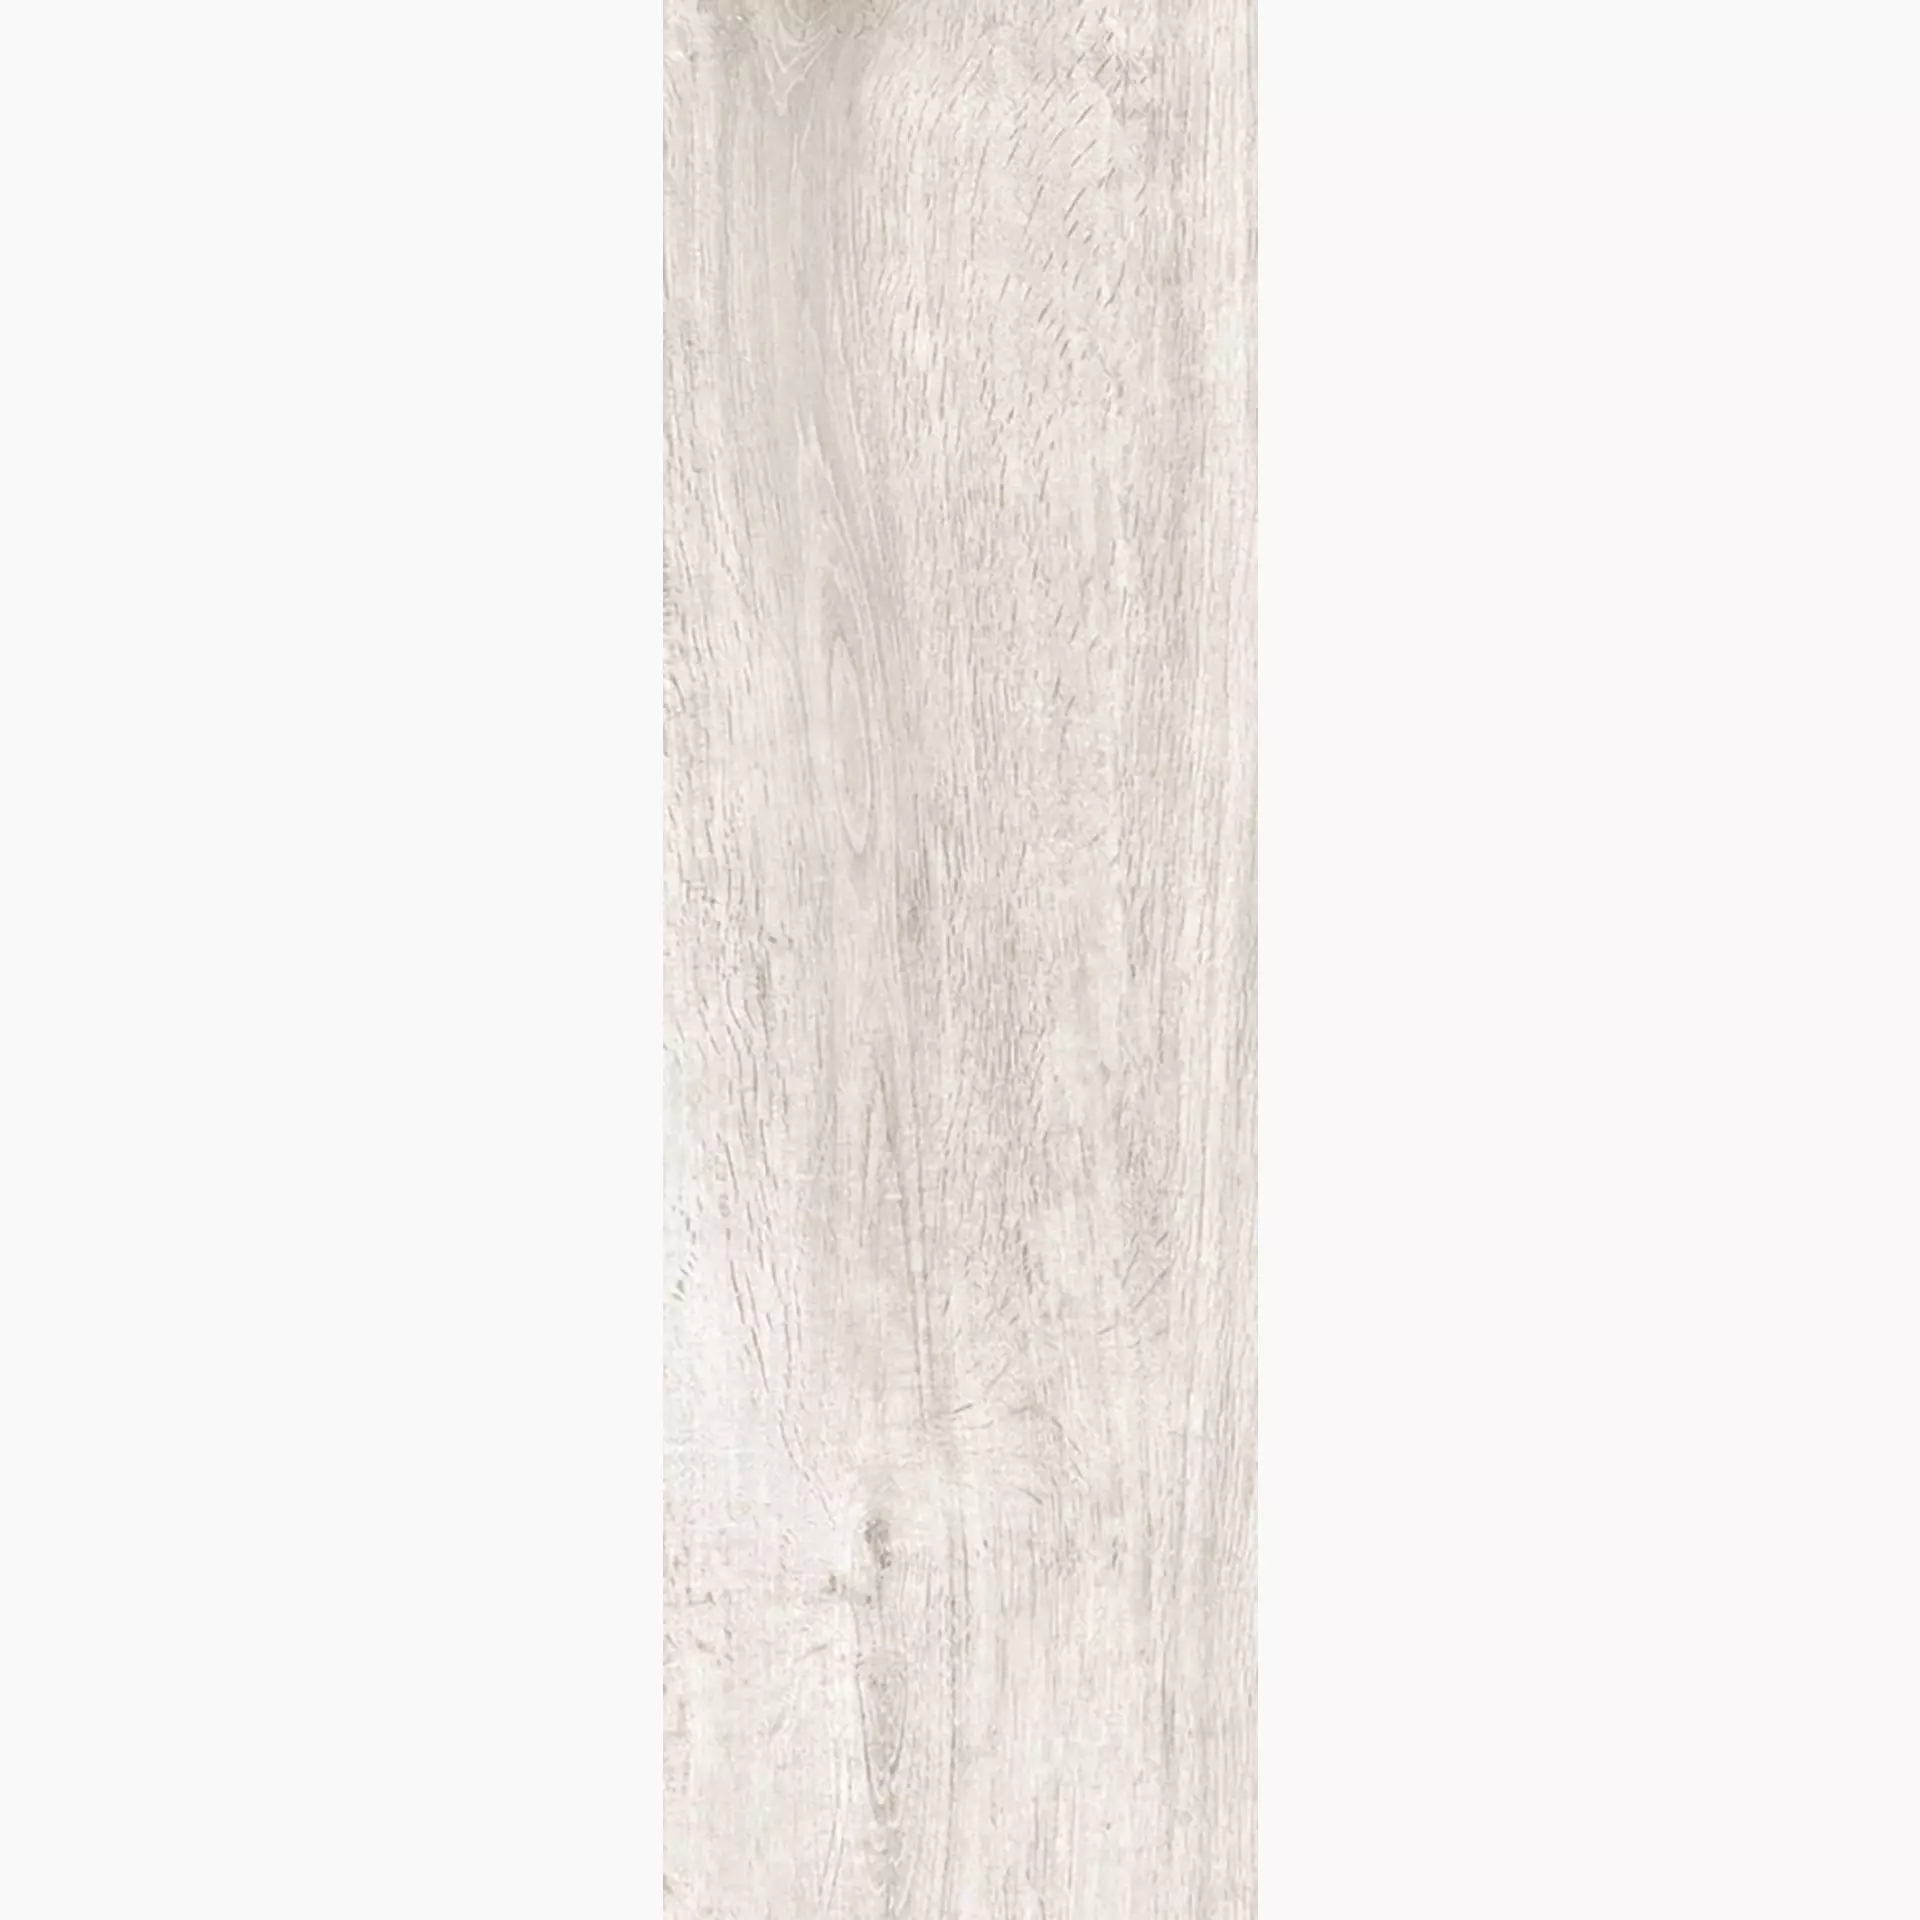 Rondine Greenwood Bianco Naturale J85040 15x61cm 9mm